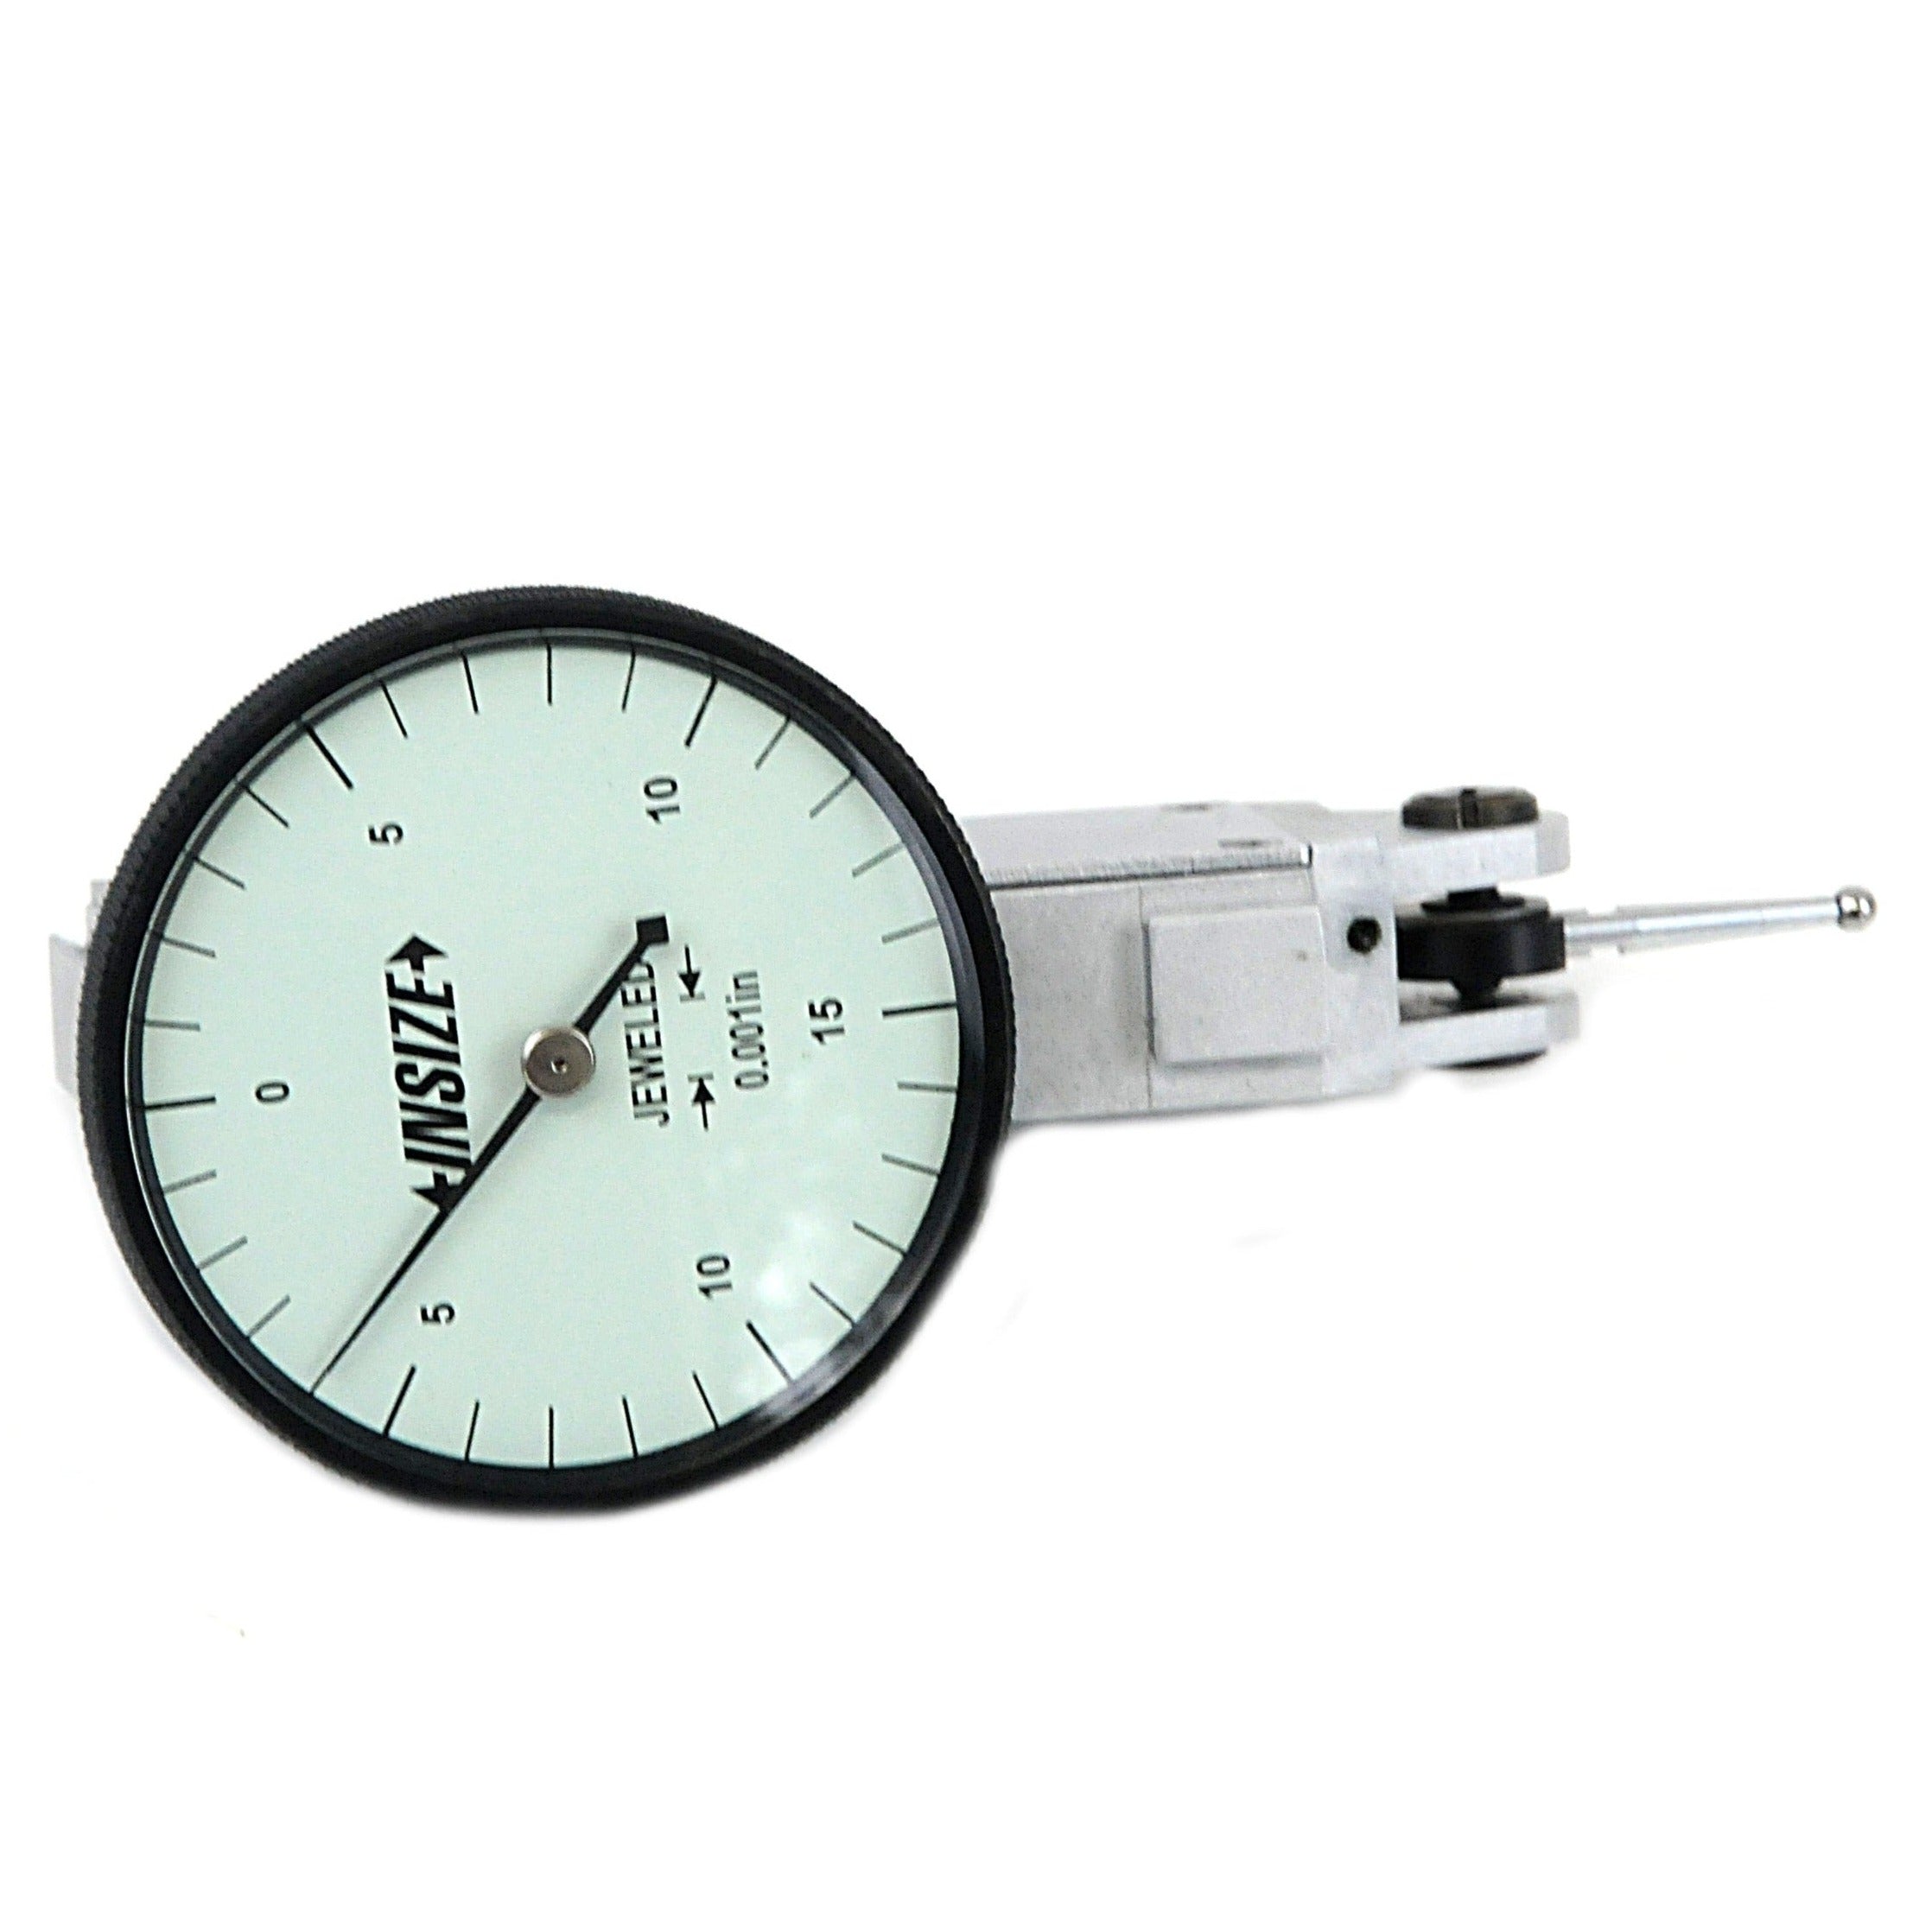 Insize Metric Dial Indicator 0.03" Range Series 2381-31